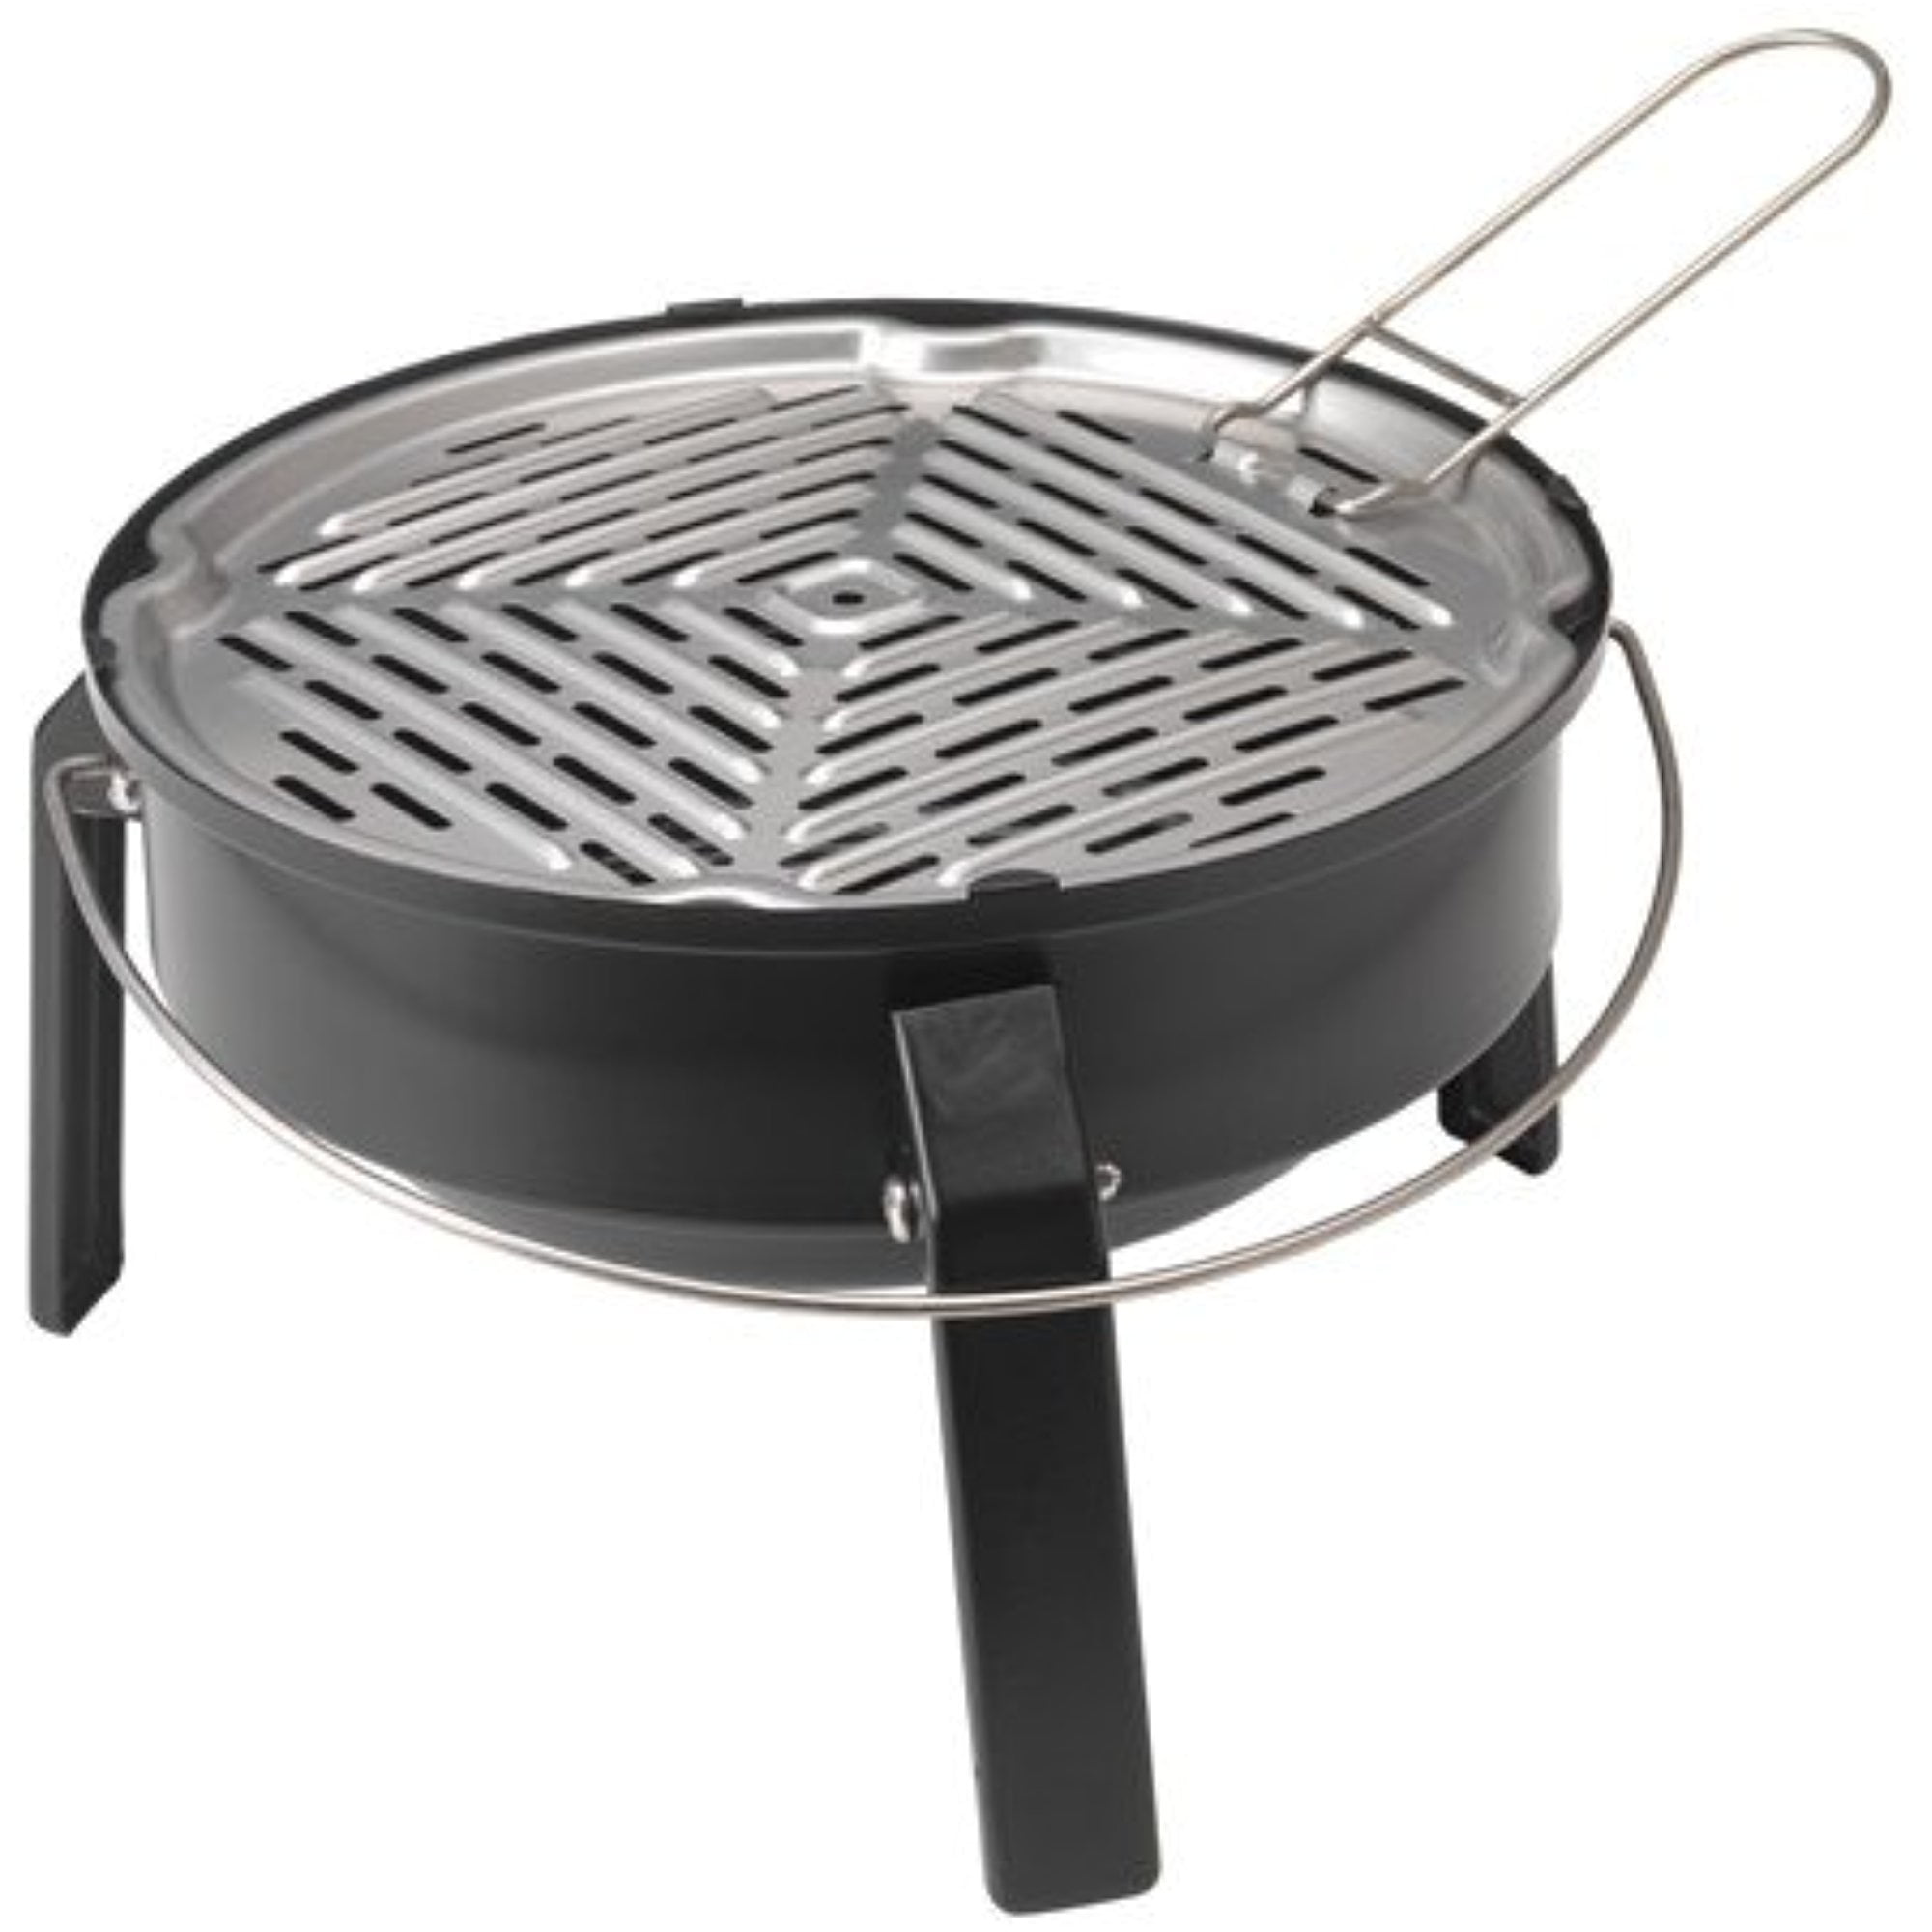 Smelten Emulatie Bevestigen Ikea Portable charcoal grill, blac 1226.261114.146 - Walmart.com